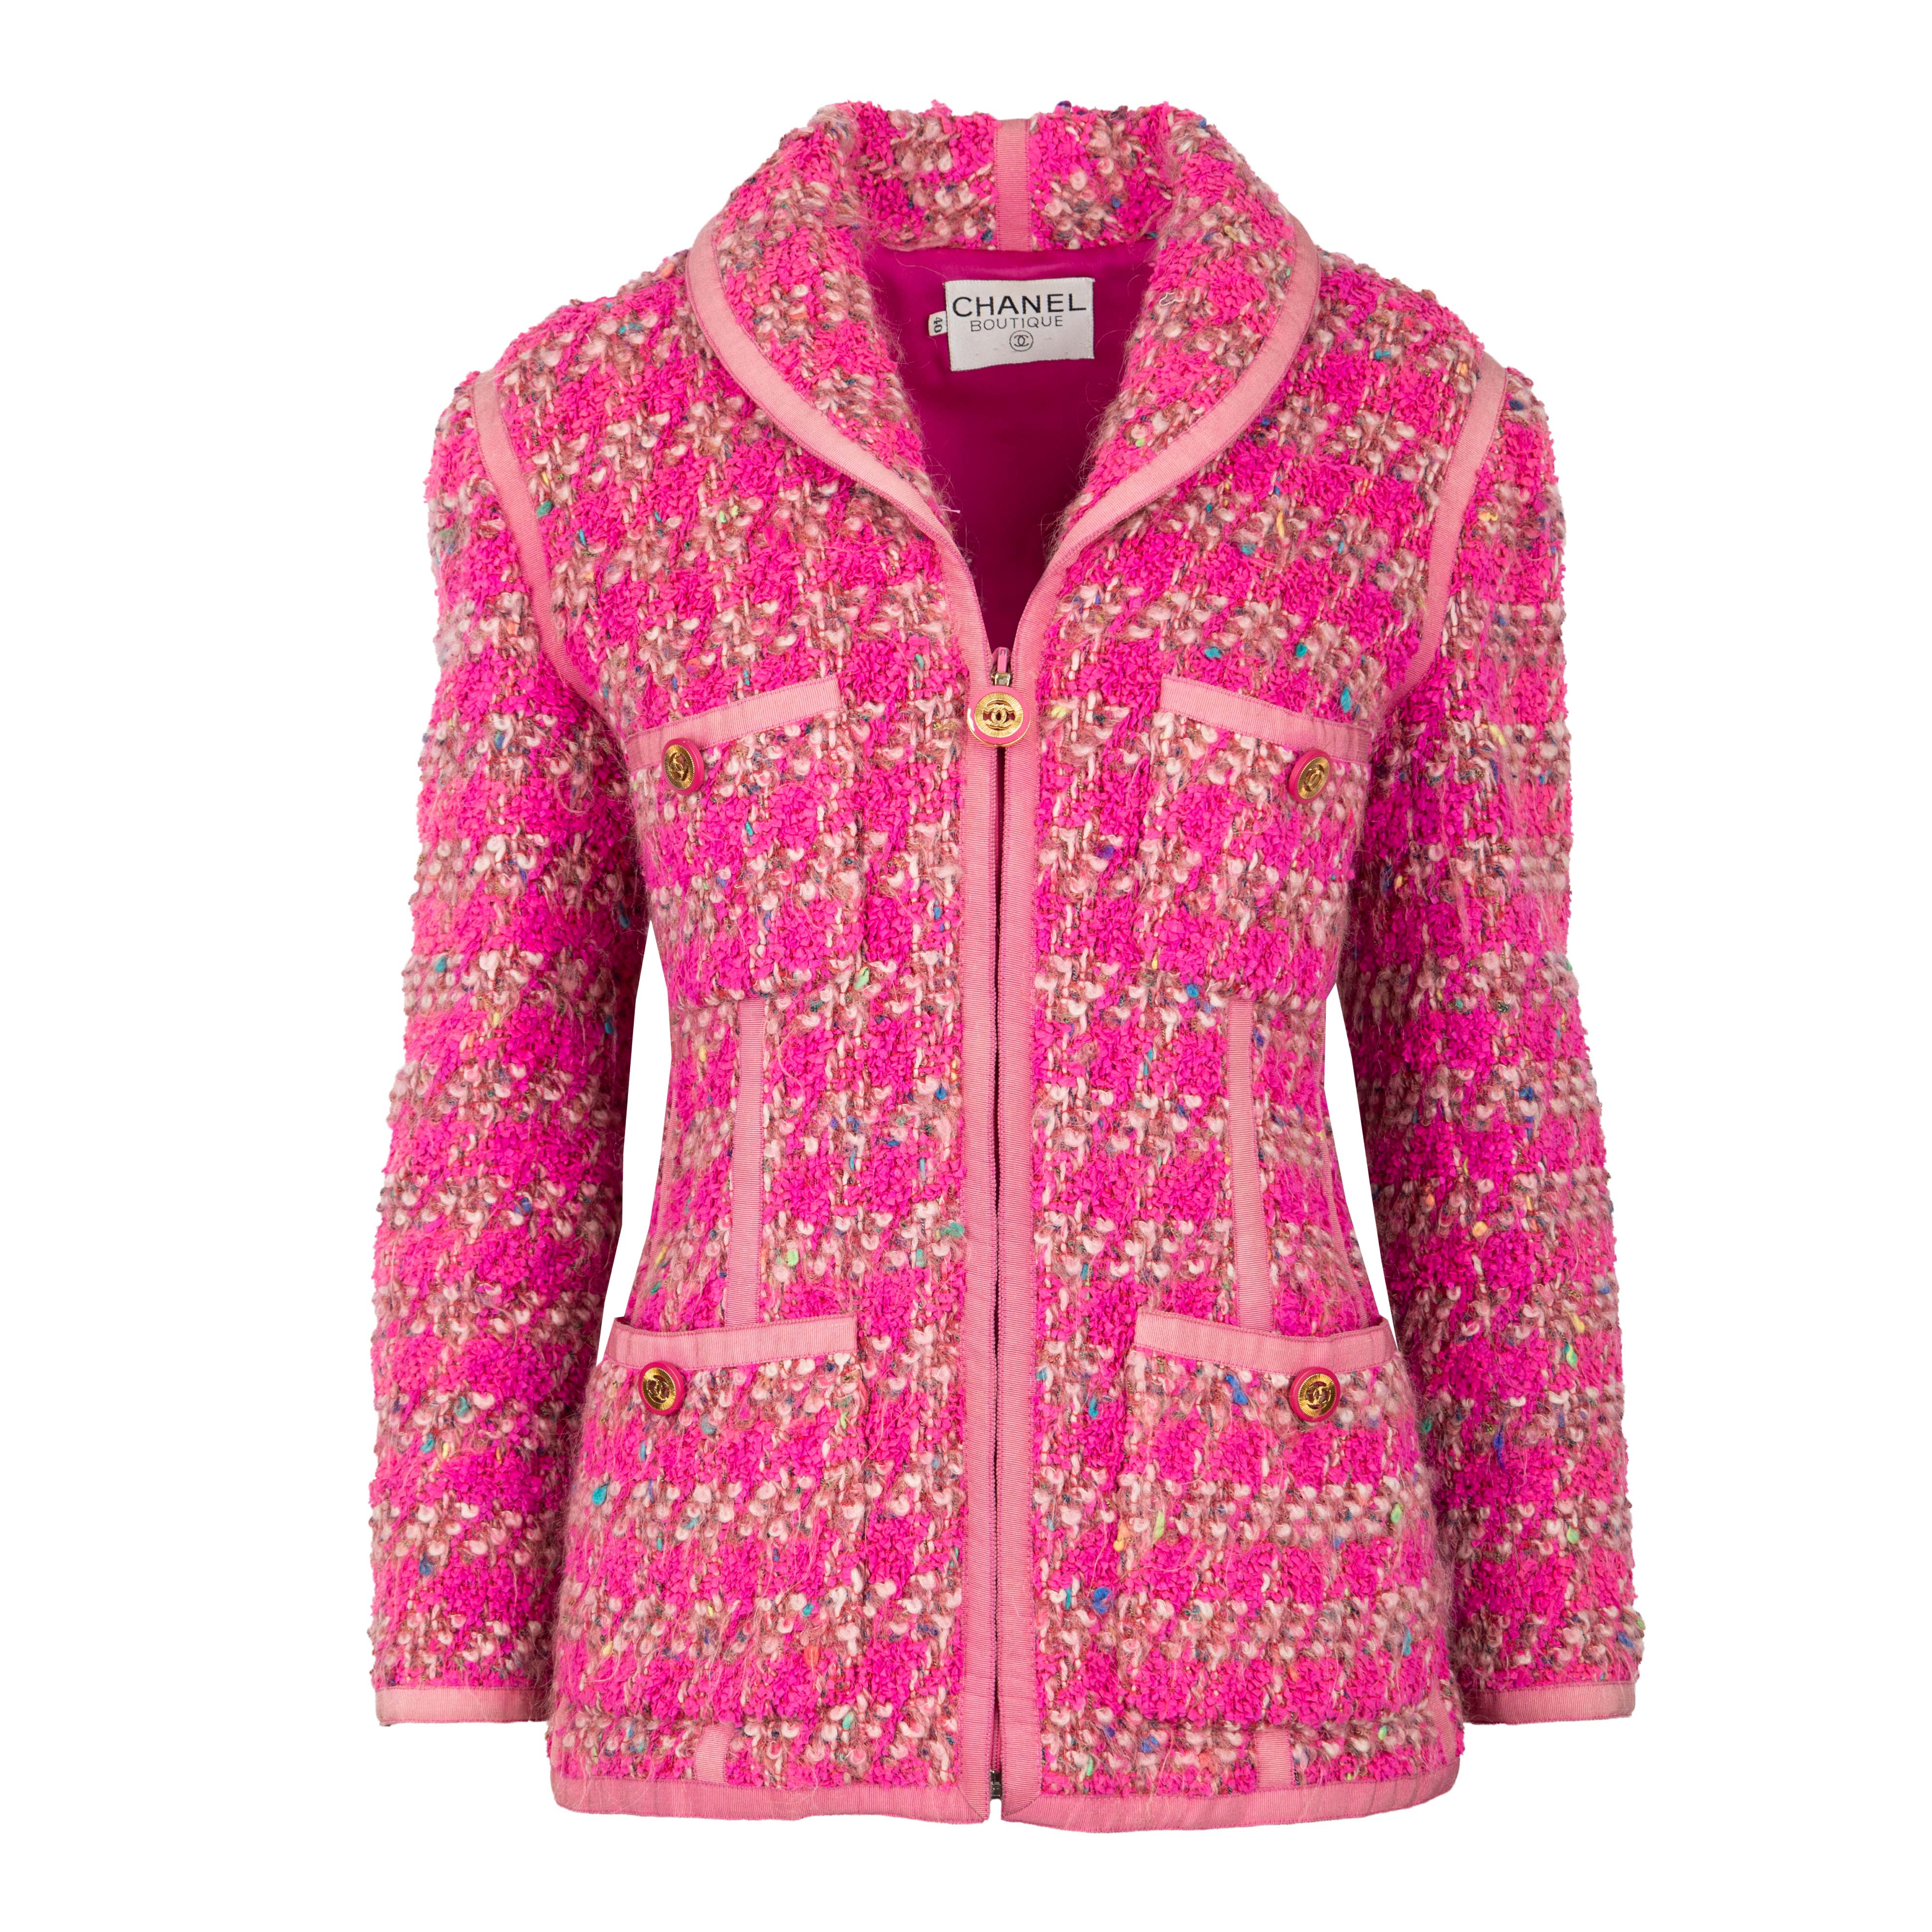 Chanel Vintage Pink Fantasy Tweed Jacket Second-hand